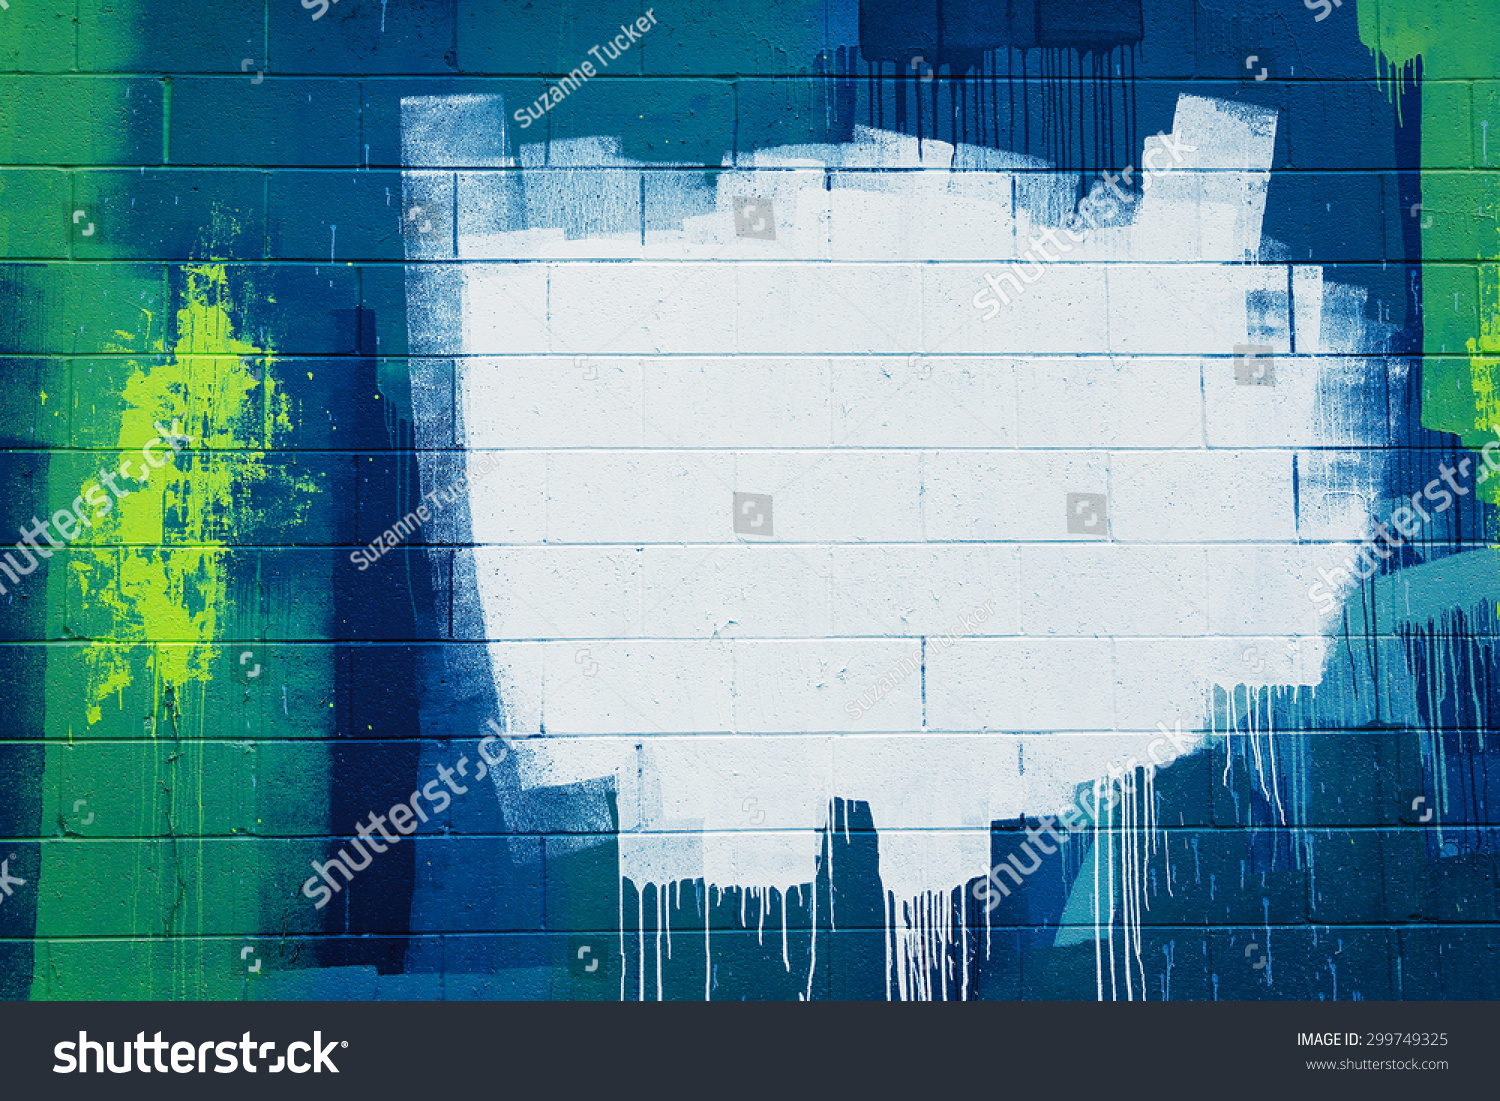 White paint stroke copyspace on a cement block wall. Urban Grunge #299749325